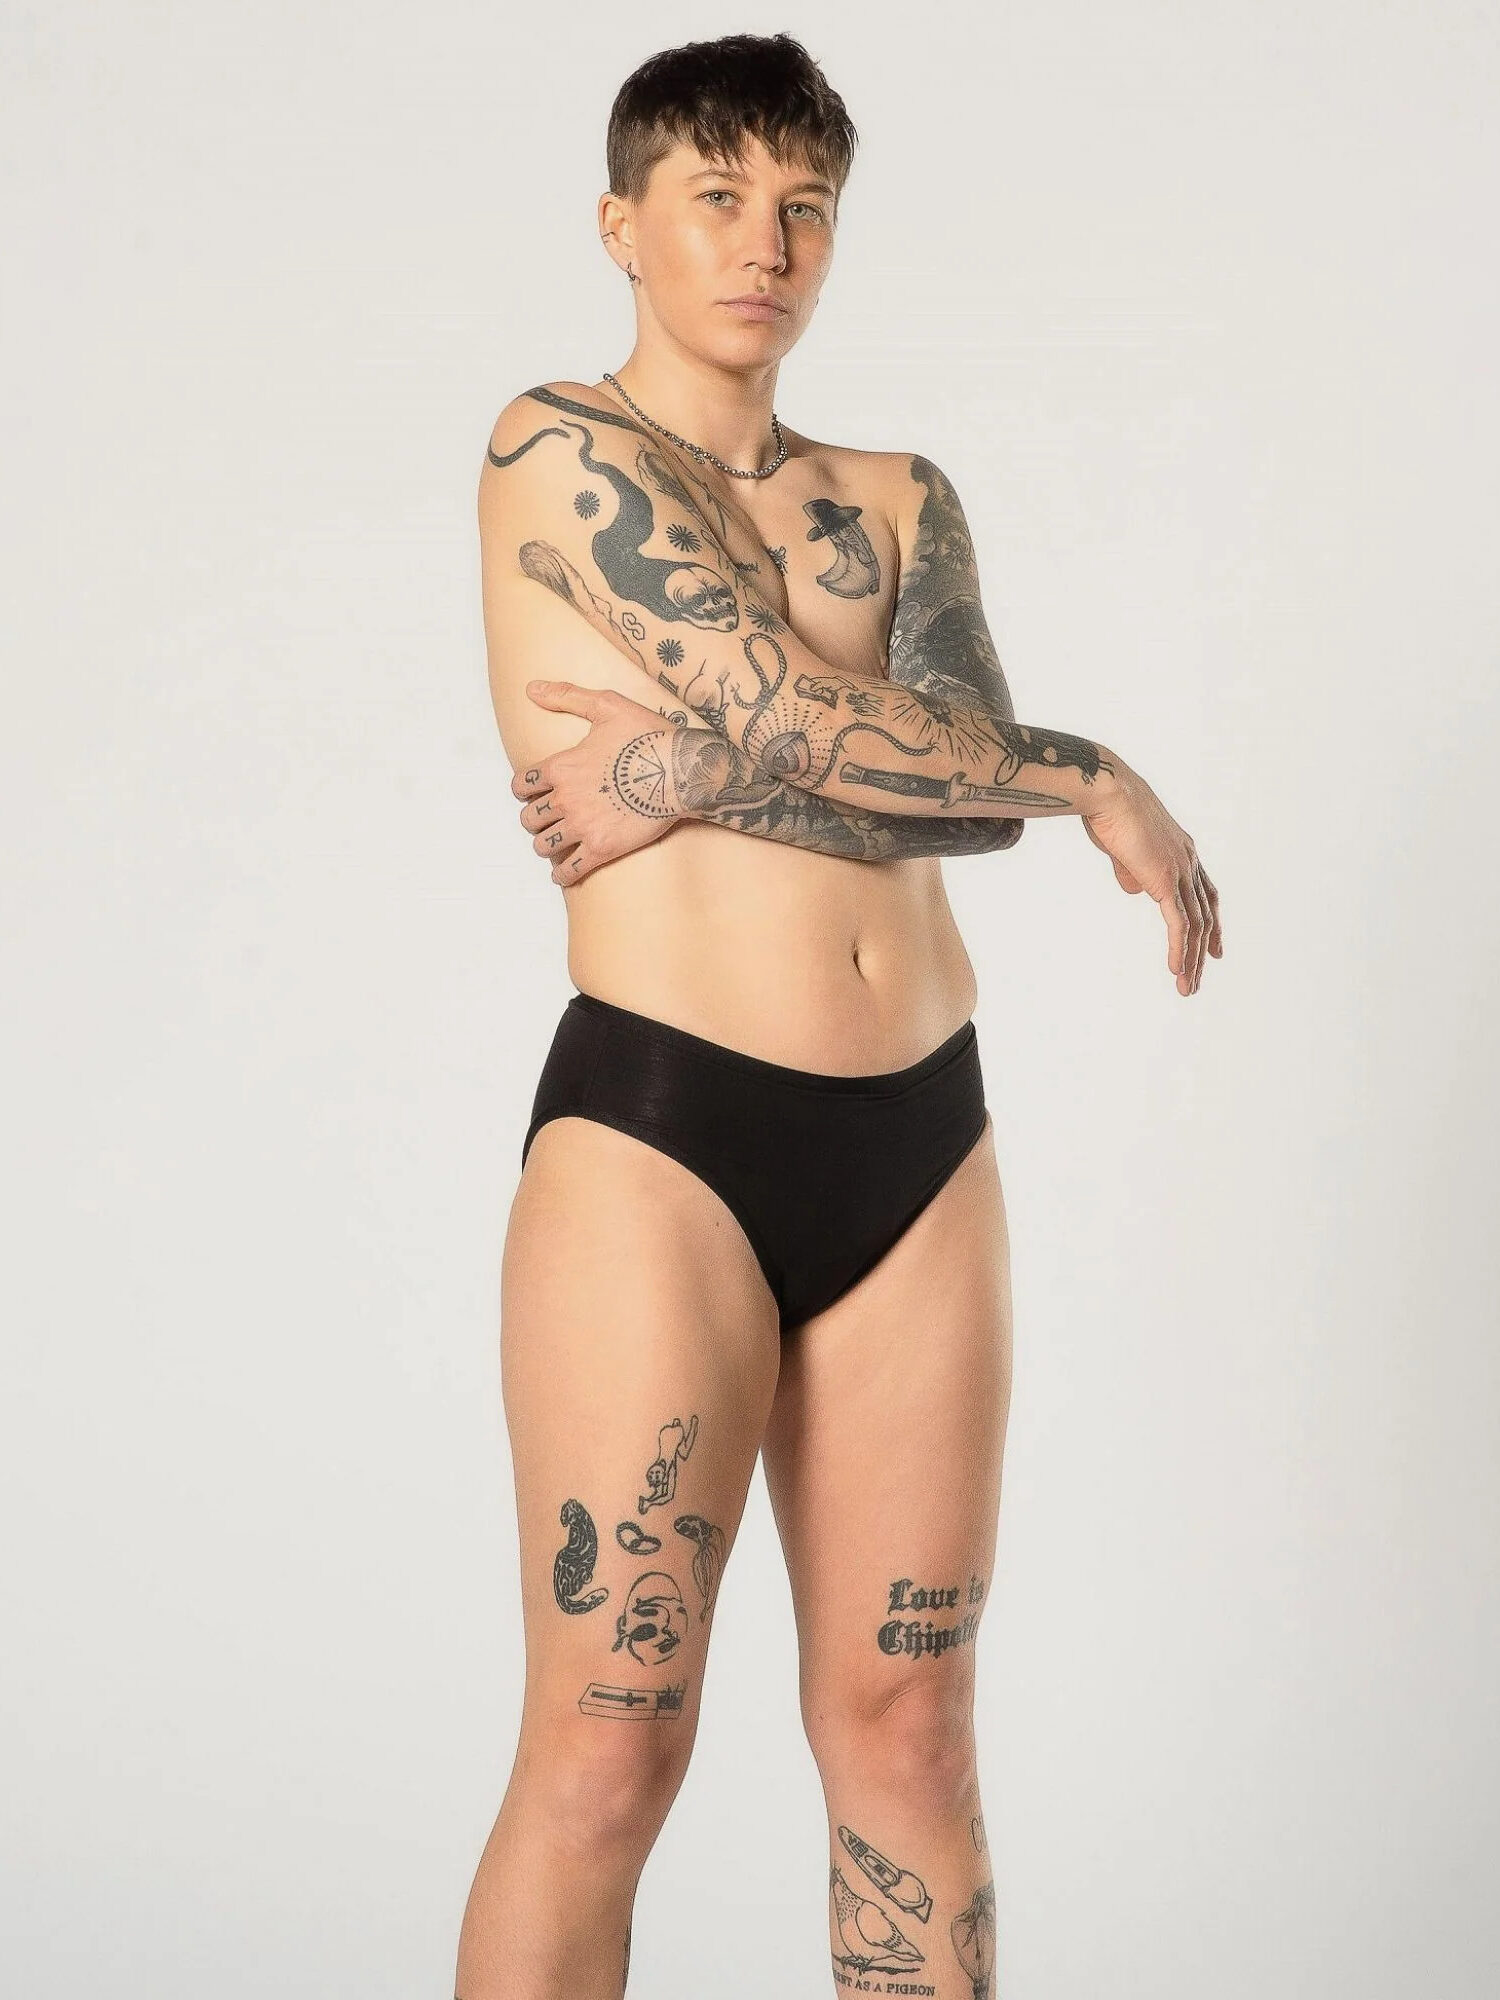 A model wearing Revol Cares period underwear in black.